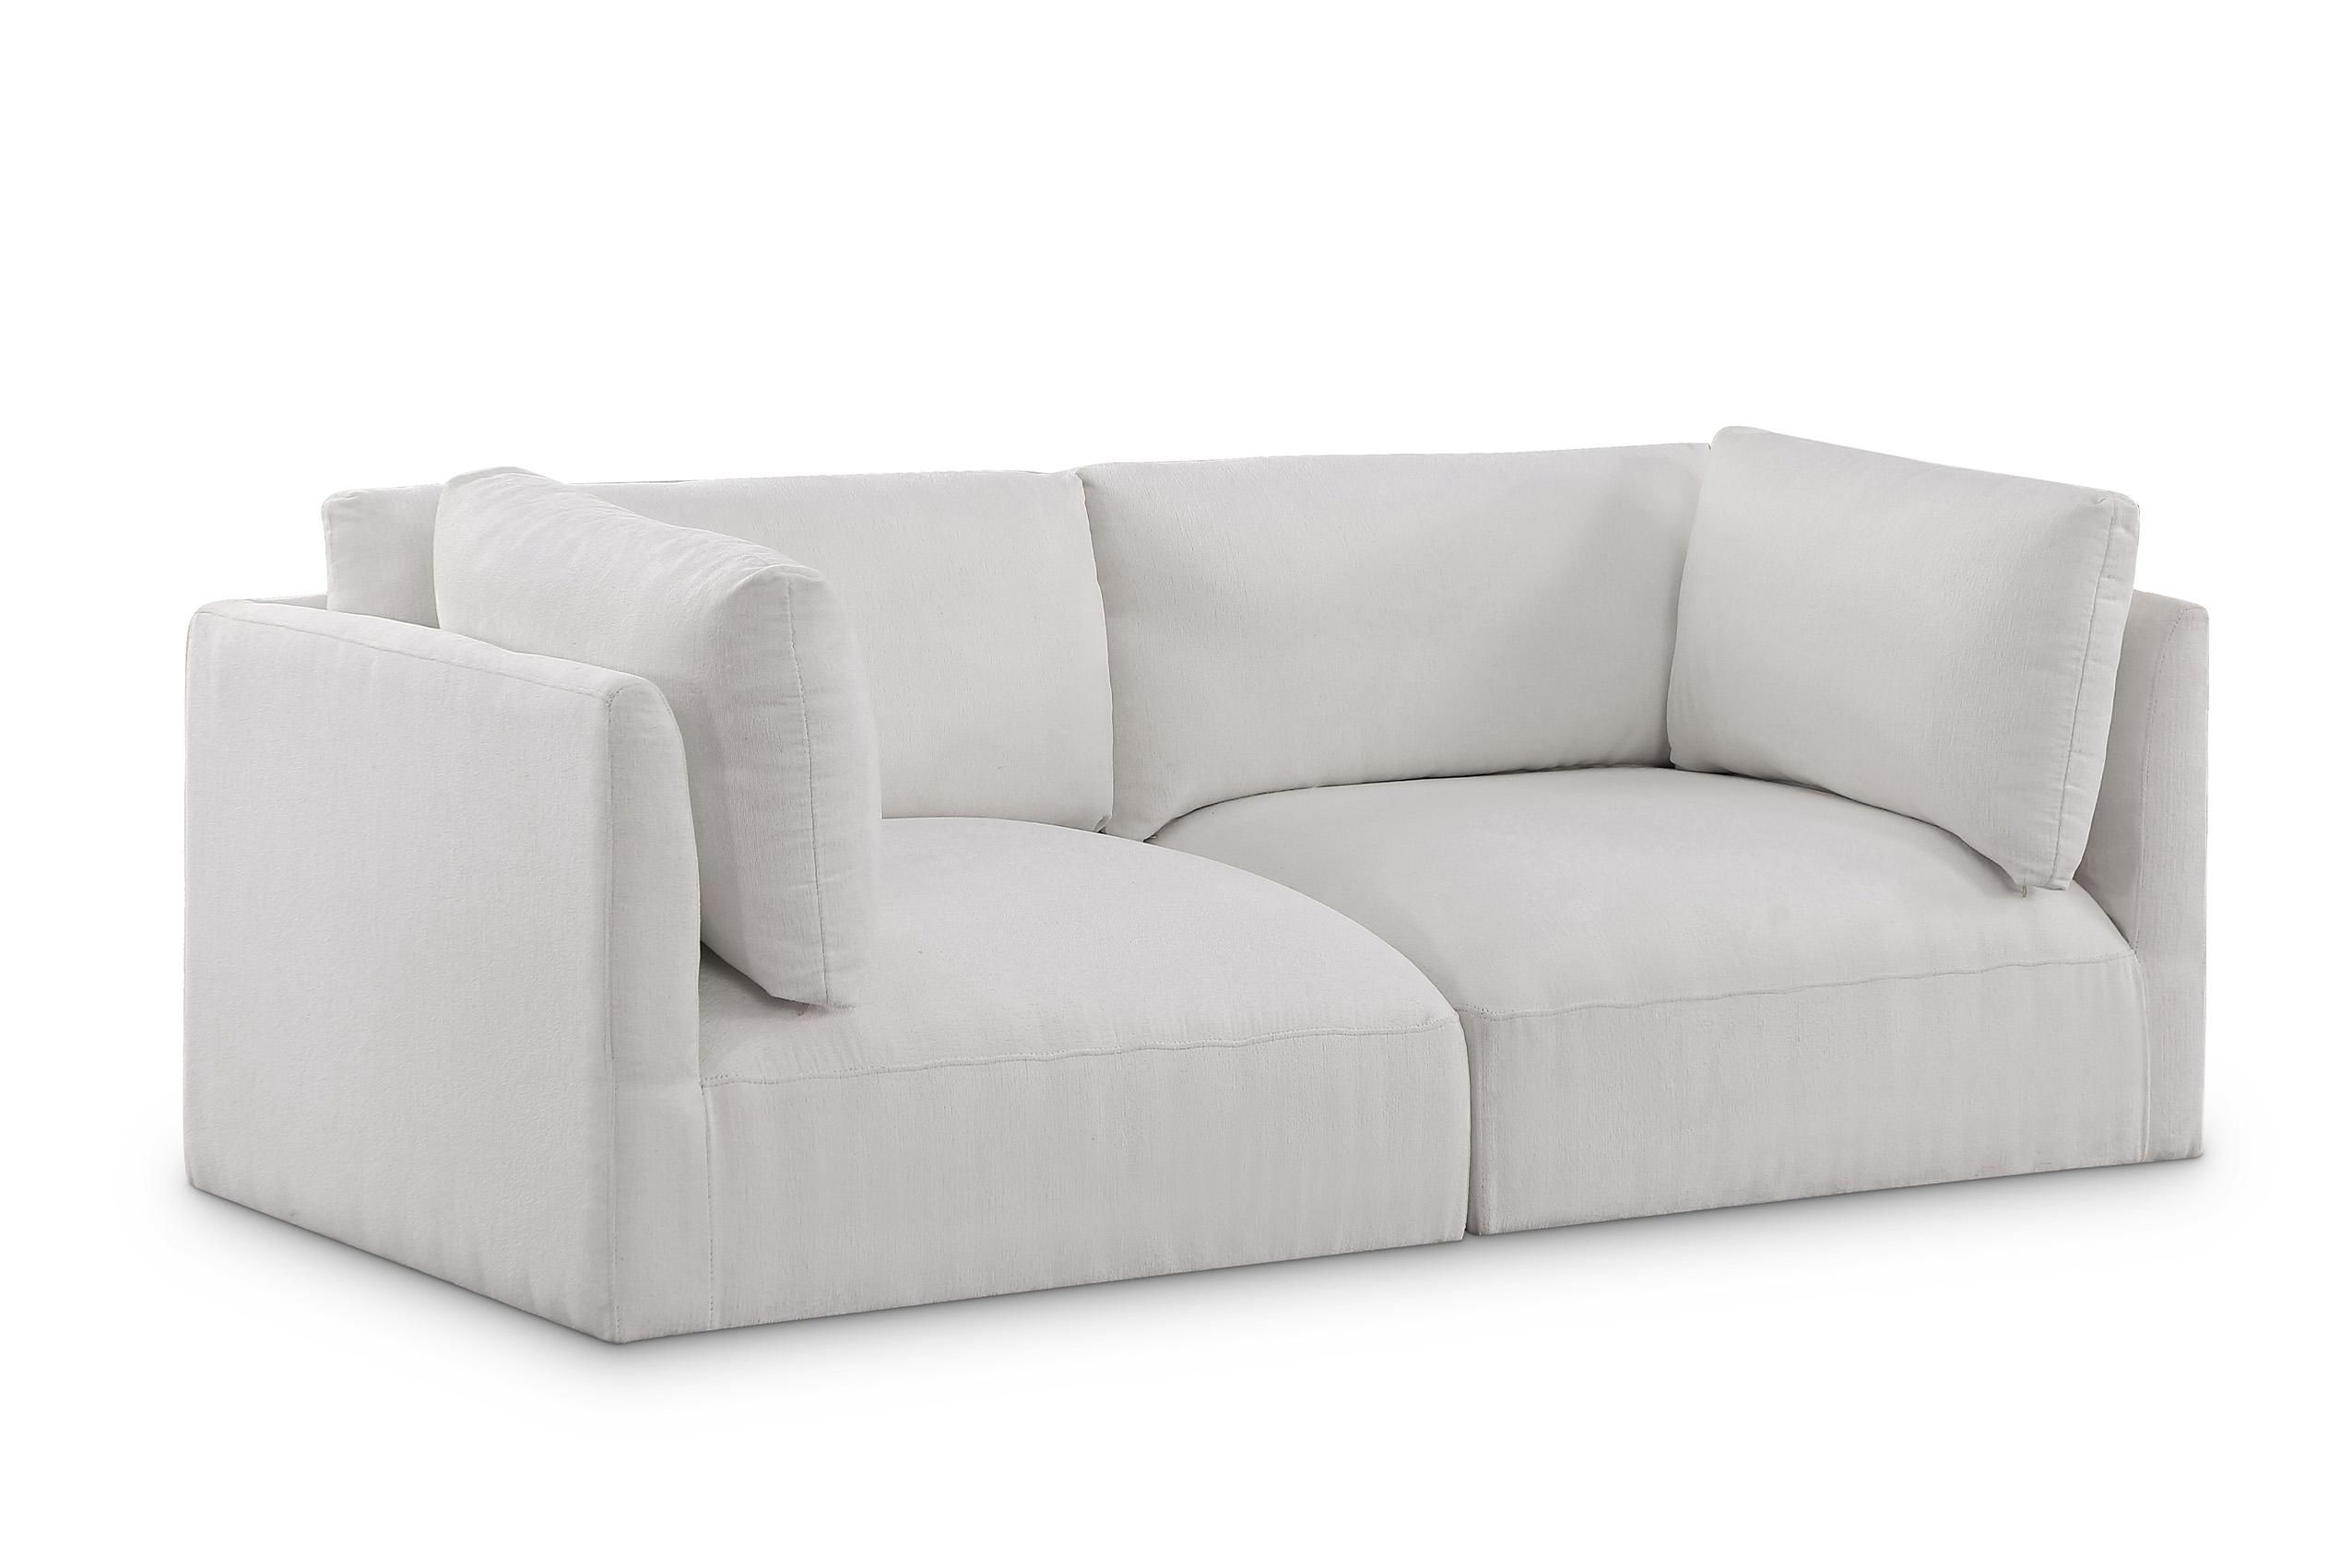 Contemporary, Modern Modular Sofa EASE 696Cream-S76B 696Cream-S76B in Cream Fabric